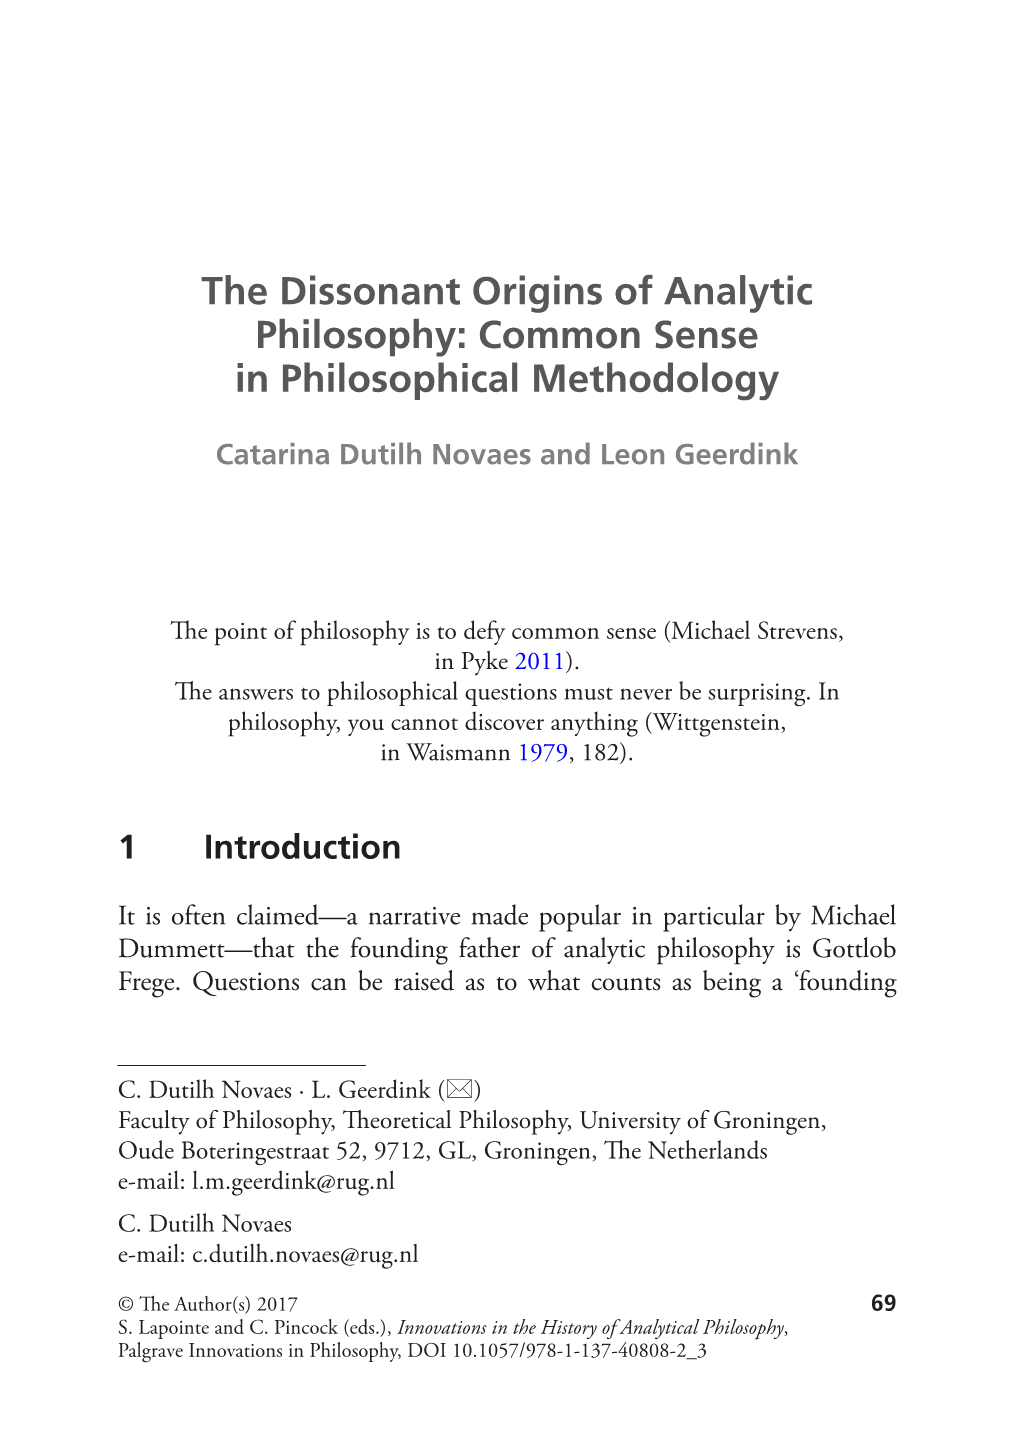 The Dissonant Origins of Analytic Philosophy: Common Sense in Philosophical Methodology